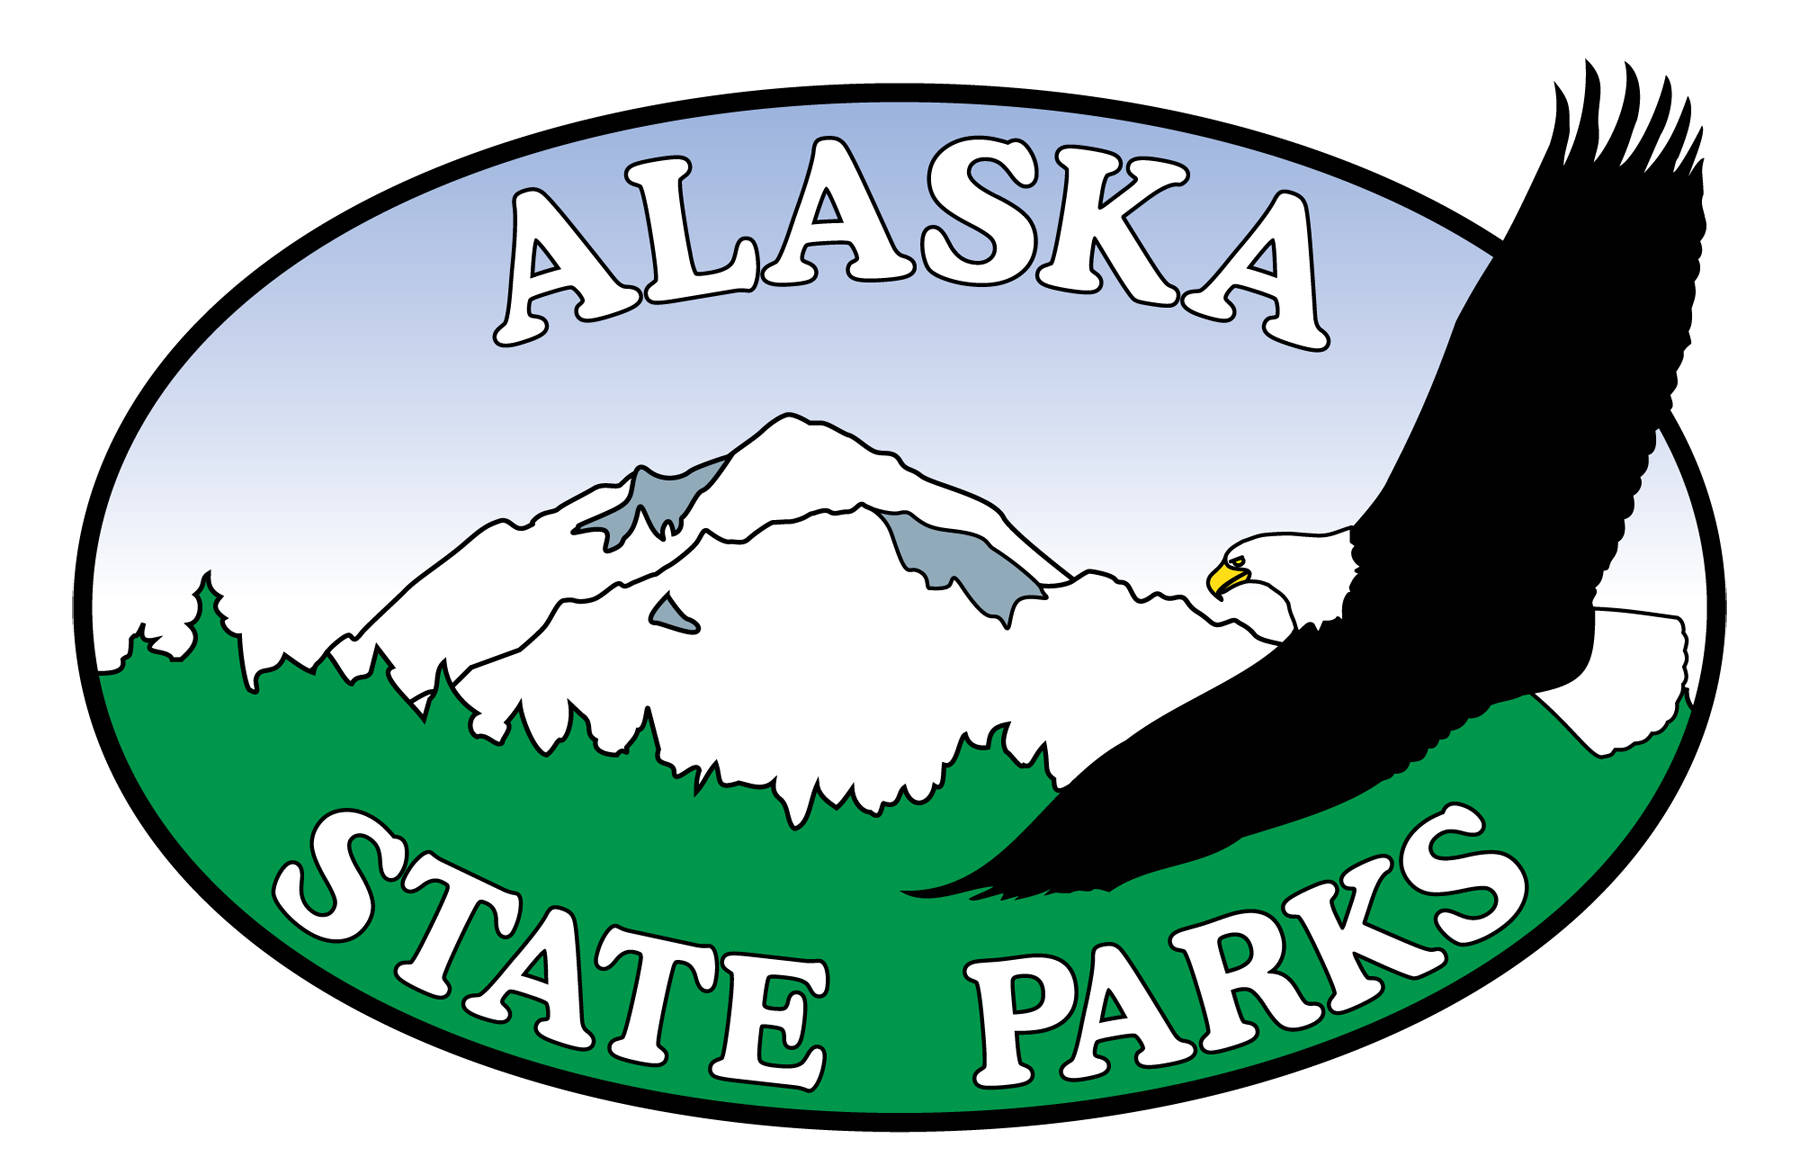 Kachemak Bay State Park logo. (Image provided)